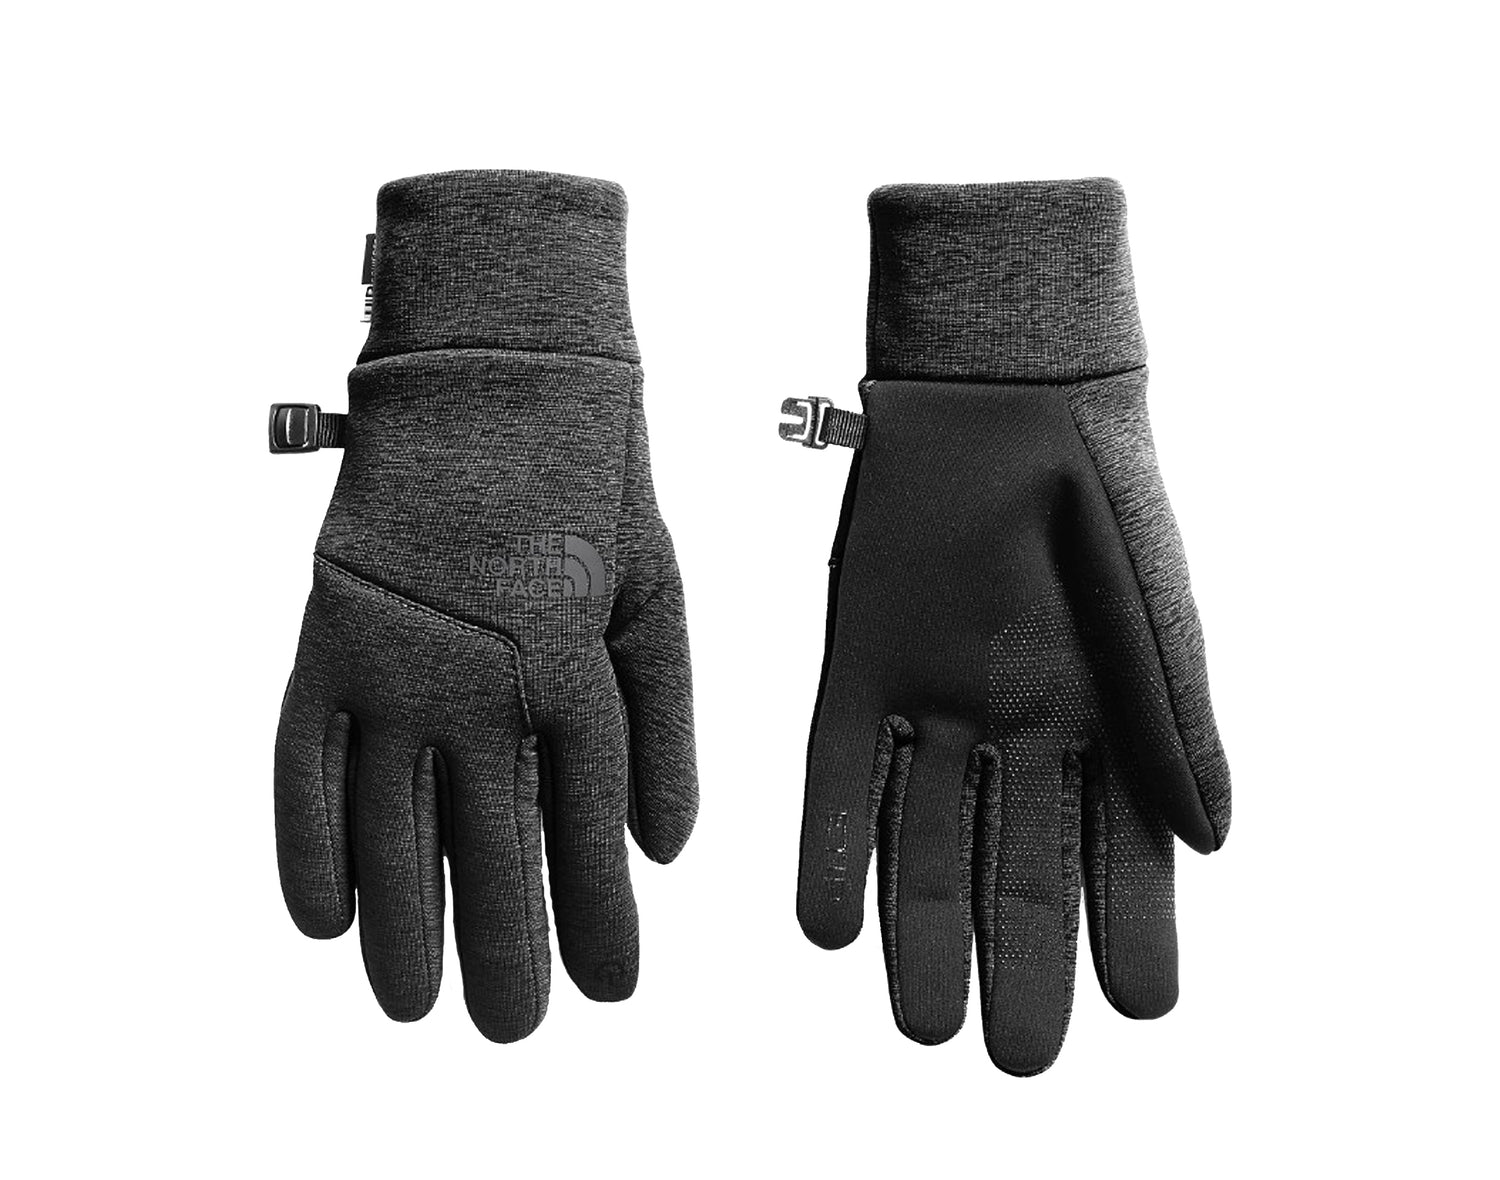 The North Face Etip Hardface Men's Gloves